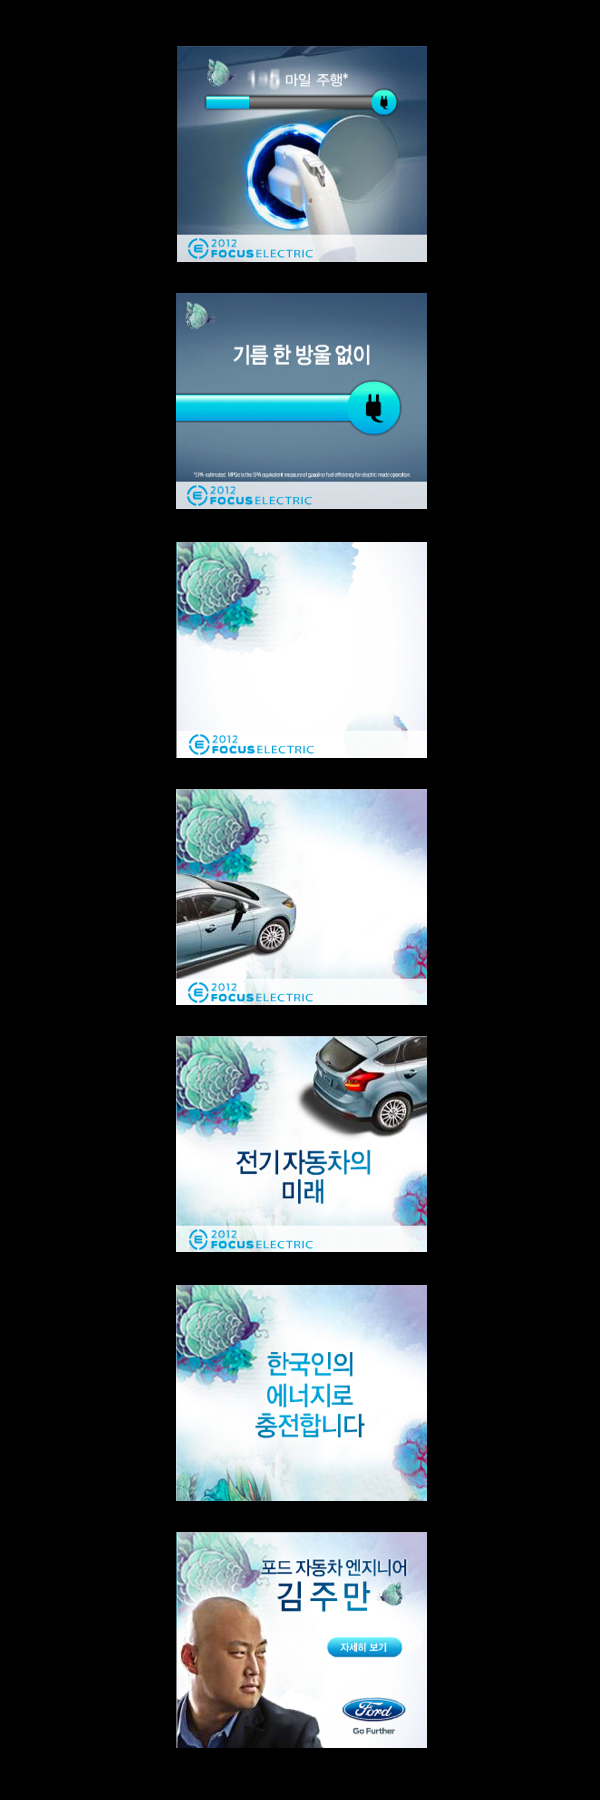 Ford korean